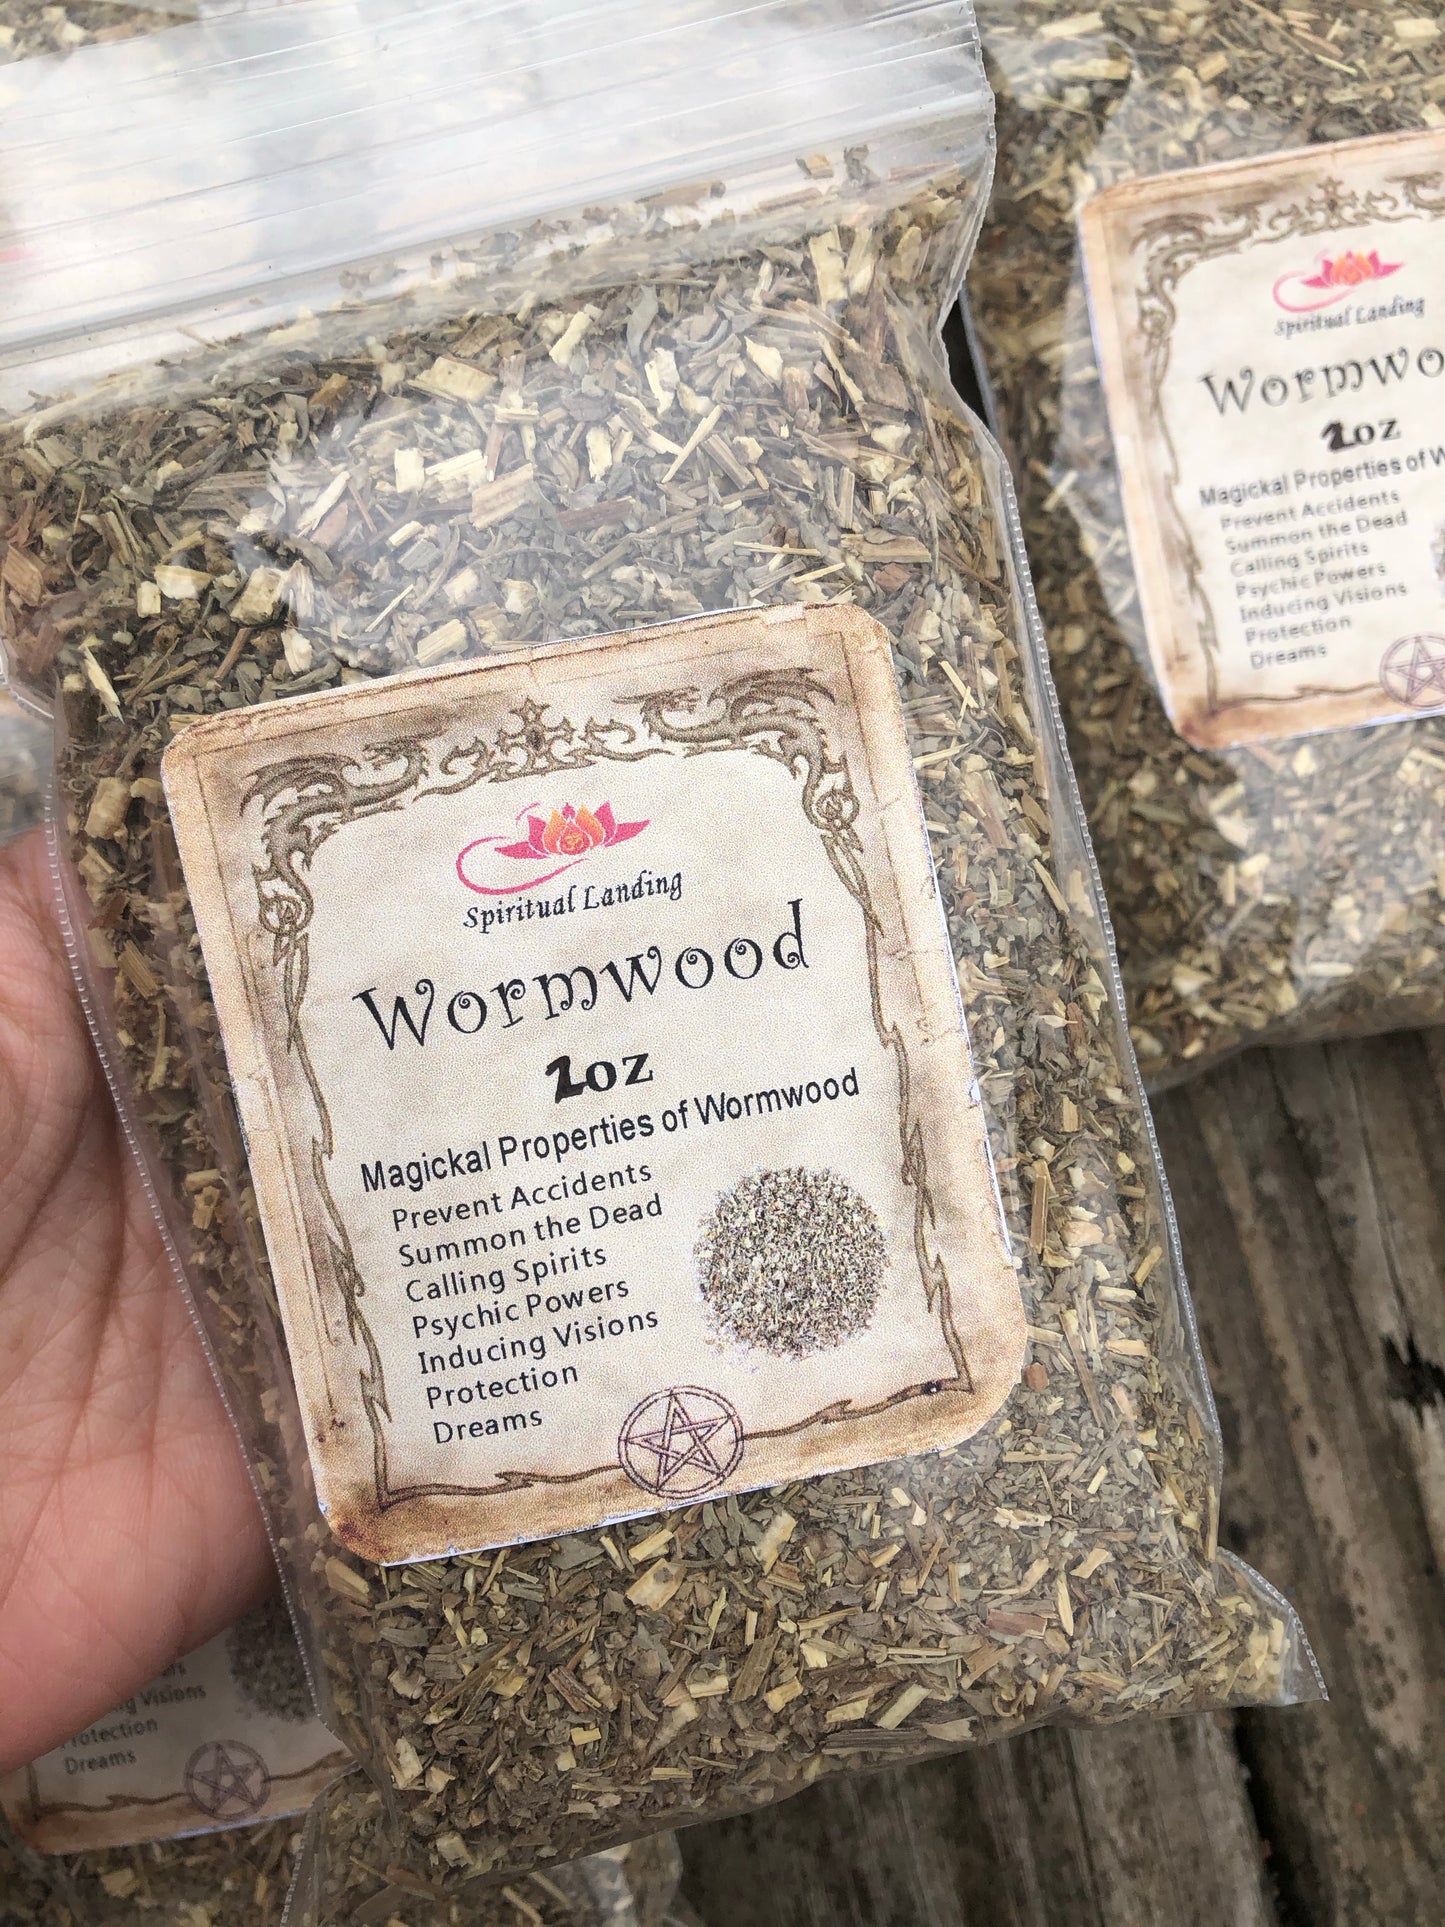 Wormwood Organic